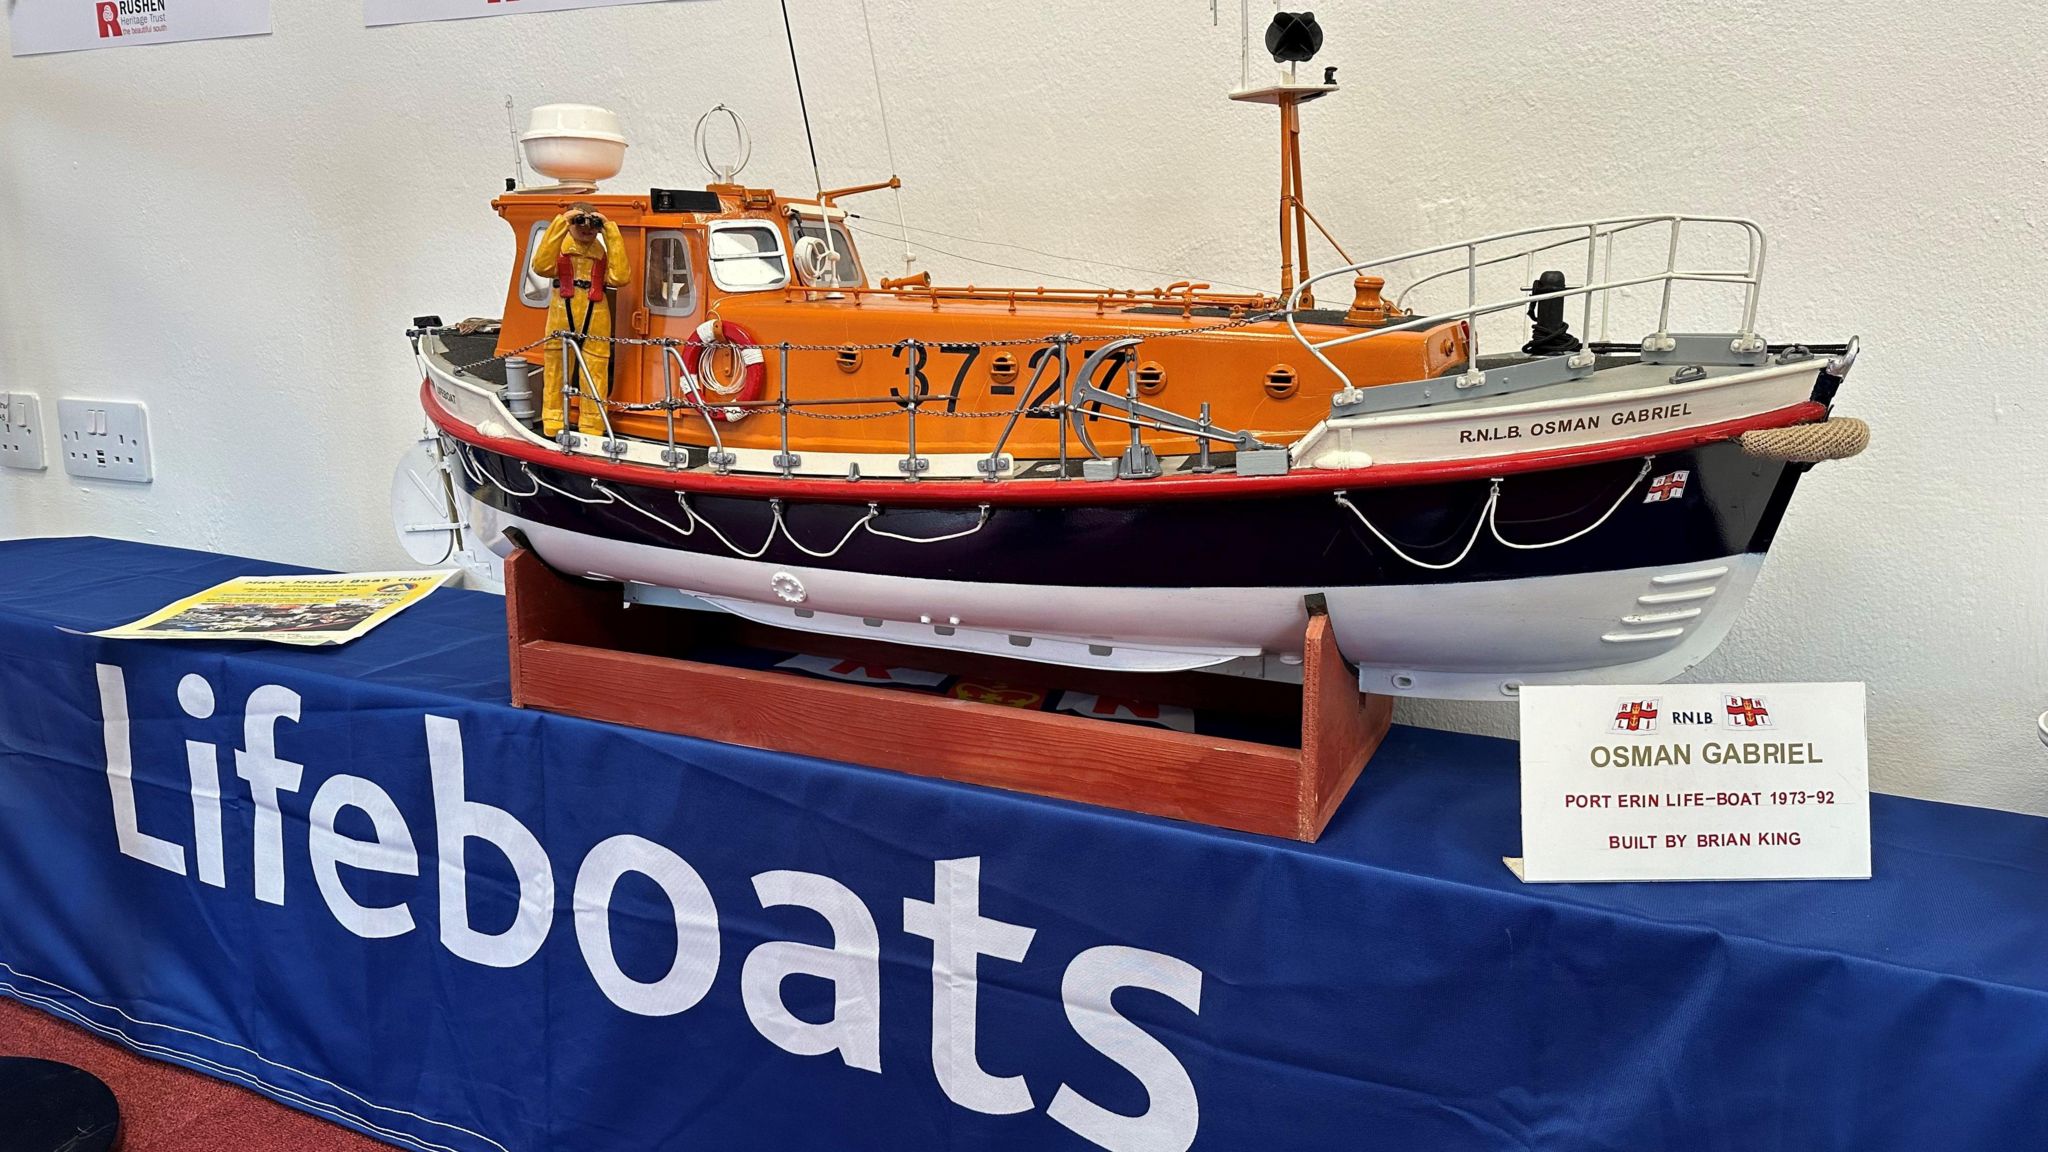 Model lifeboat